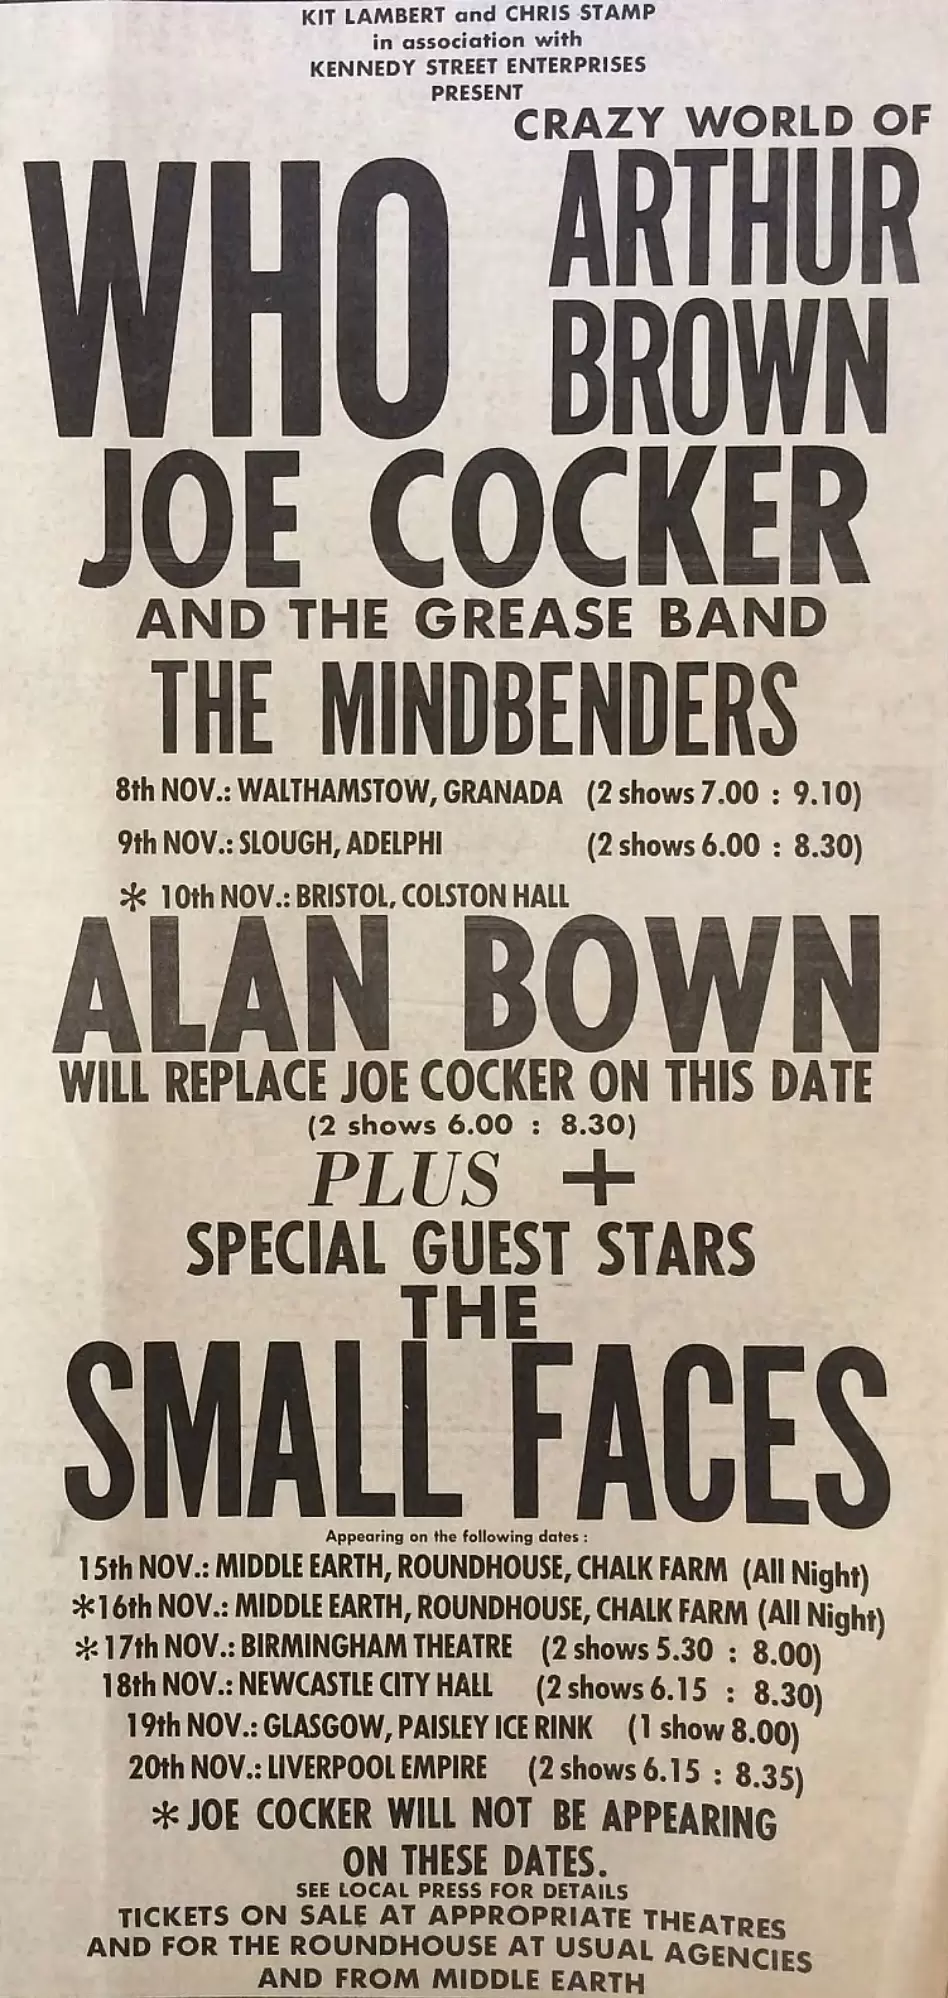 Small Faces - November 18 1968 at Newcastle City Hall -playbill